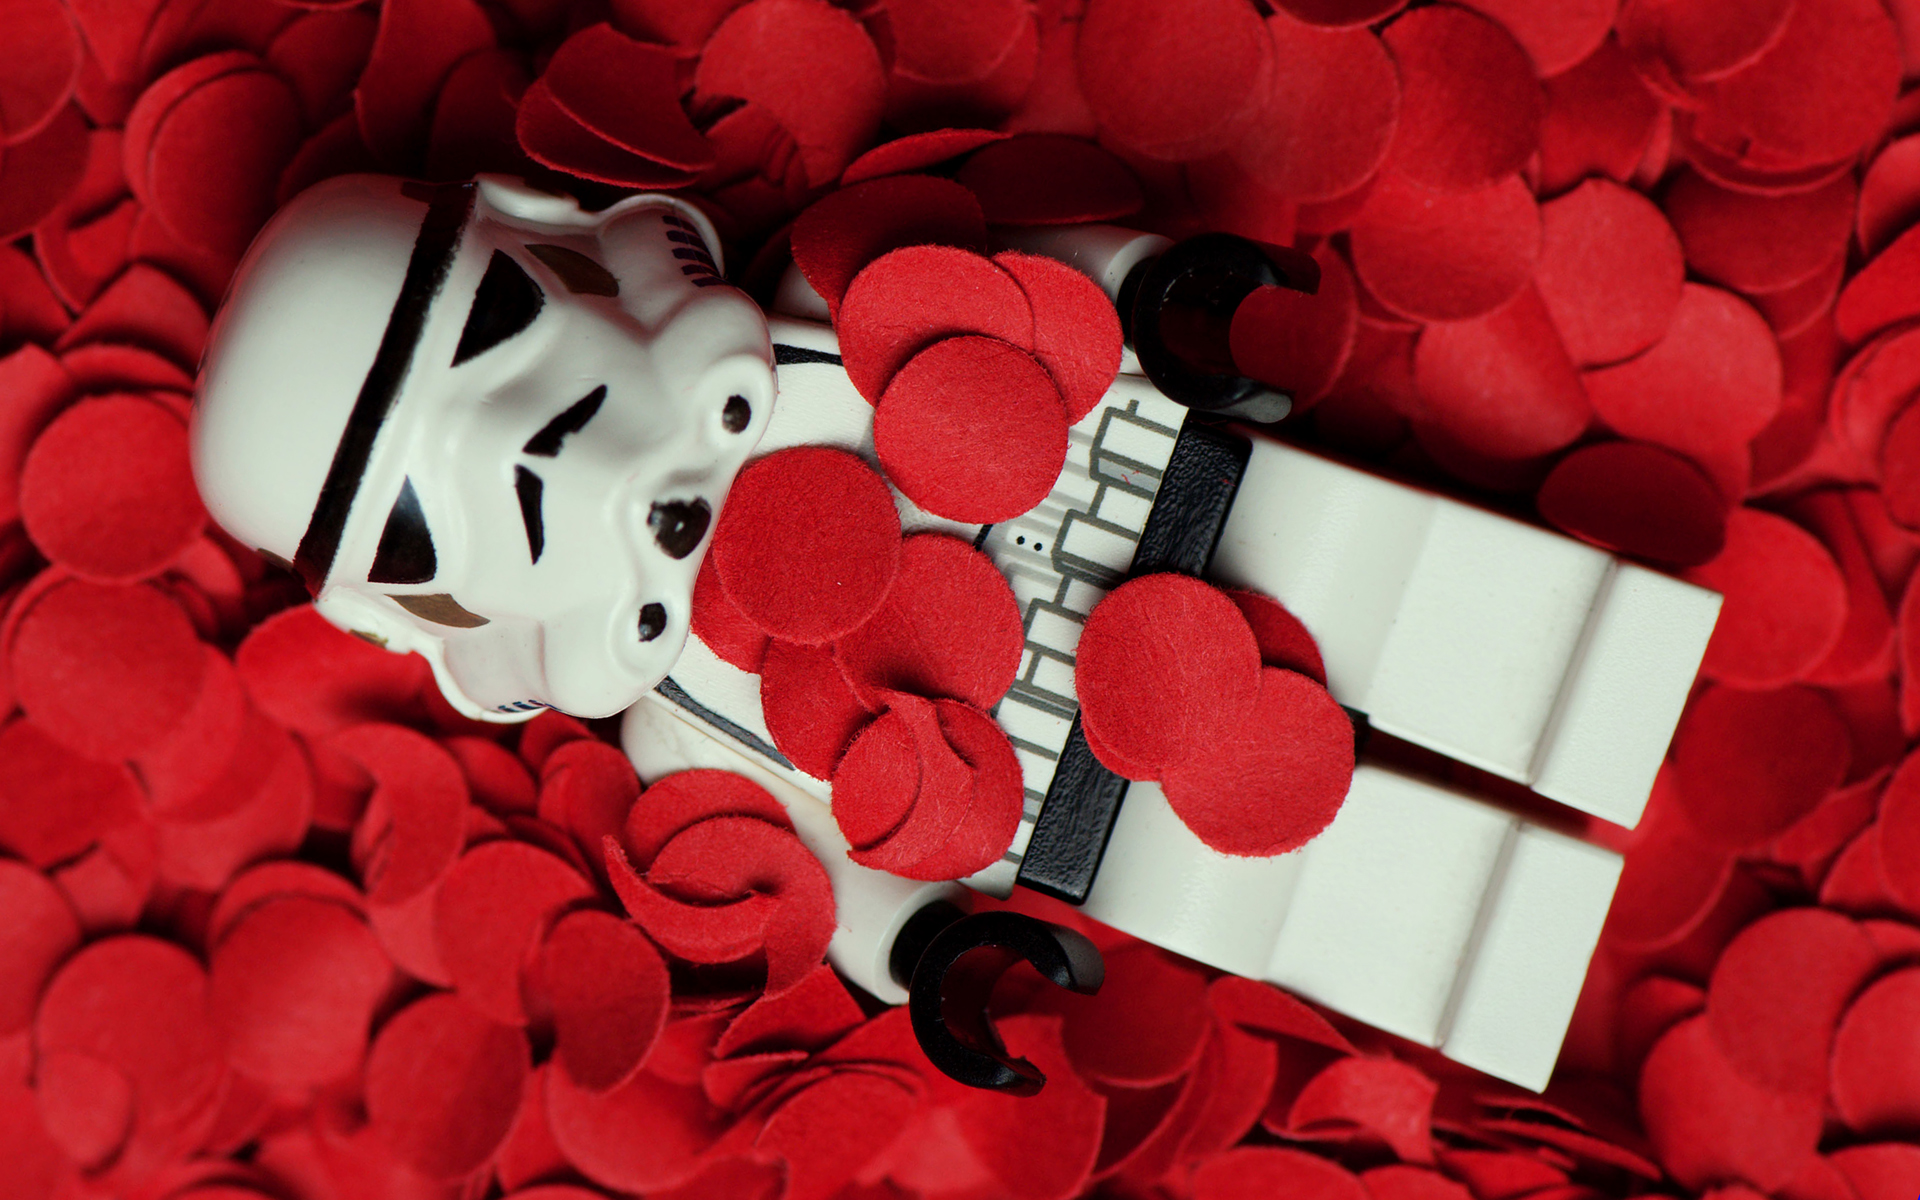 Wars flowers stormtroopers American Beauty Legos rose petals wallpaper